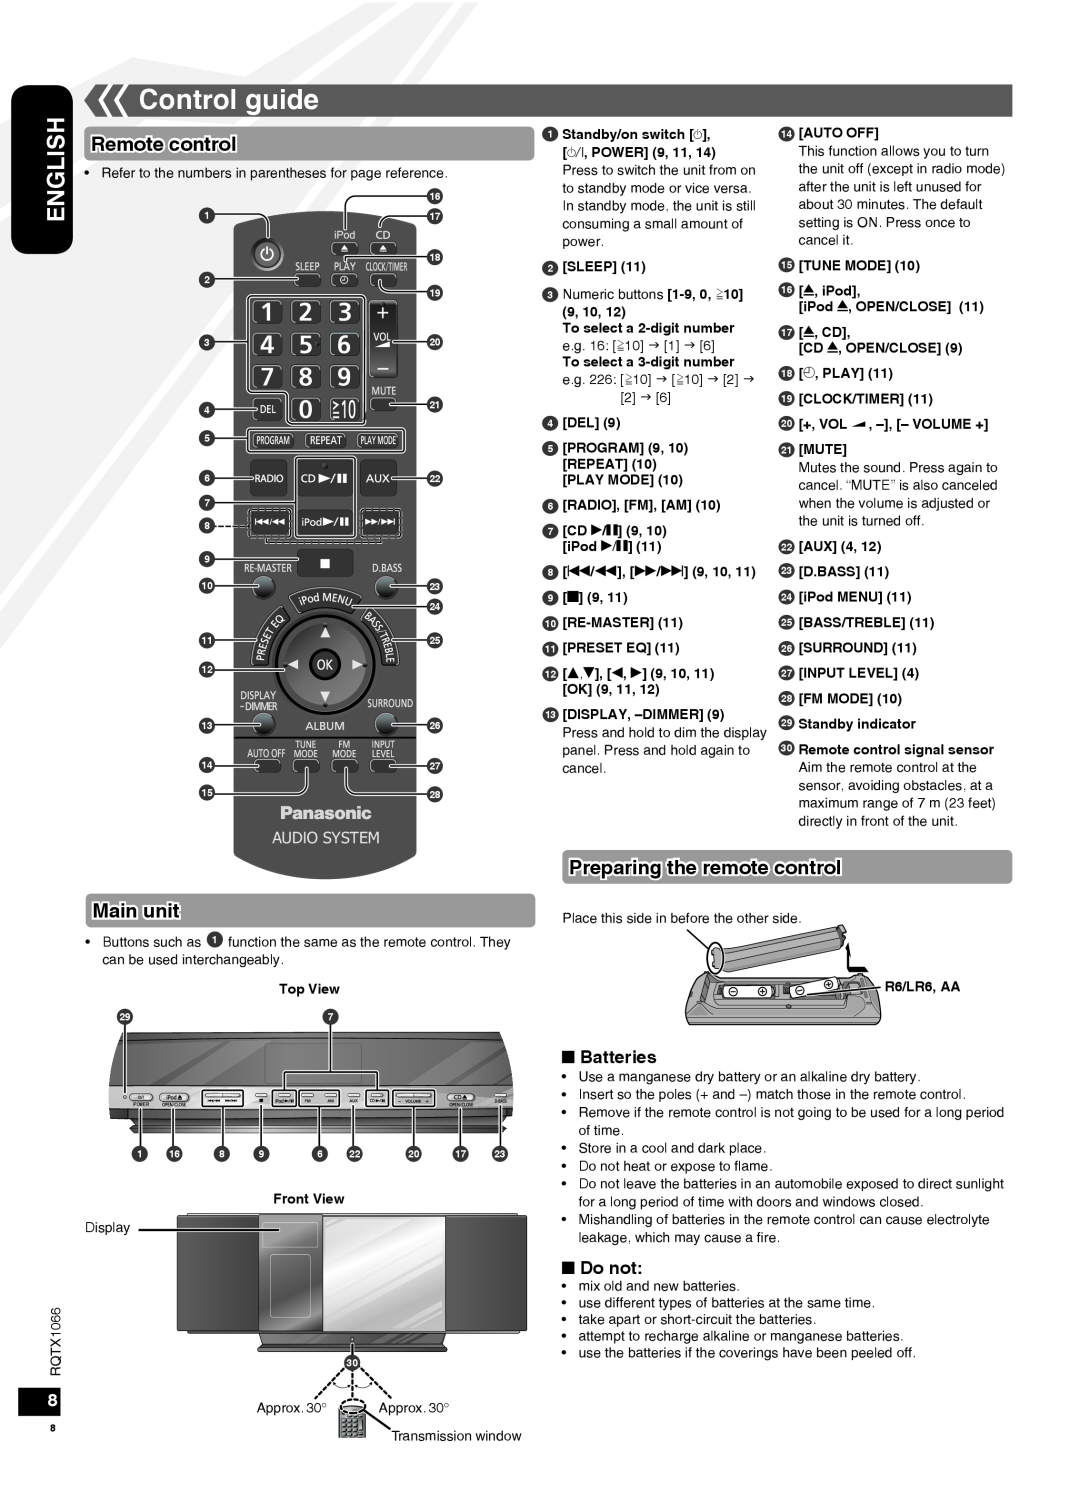 Panasonic SC-HC30 Control guide, Main unit, Preparing the remote control, Batteries, Do not, Audio System, English 